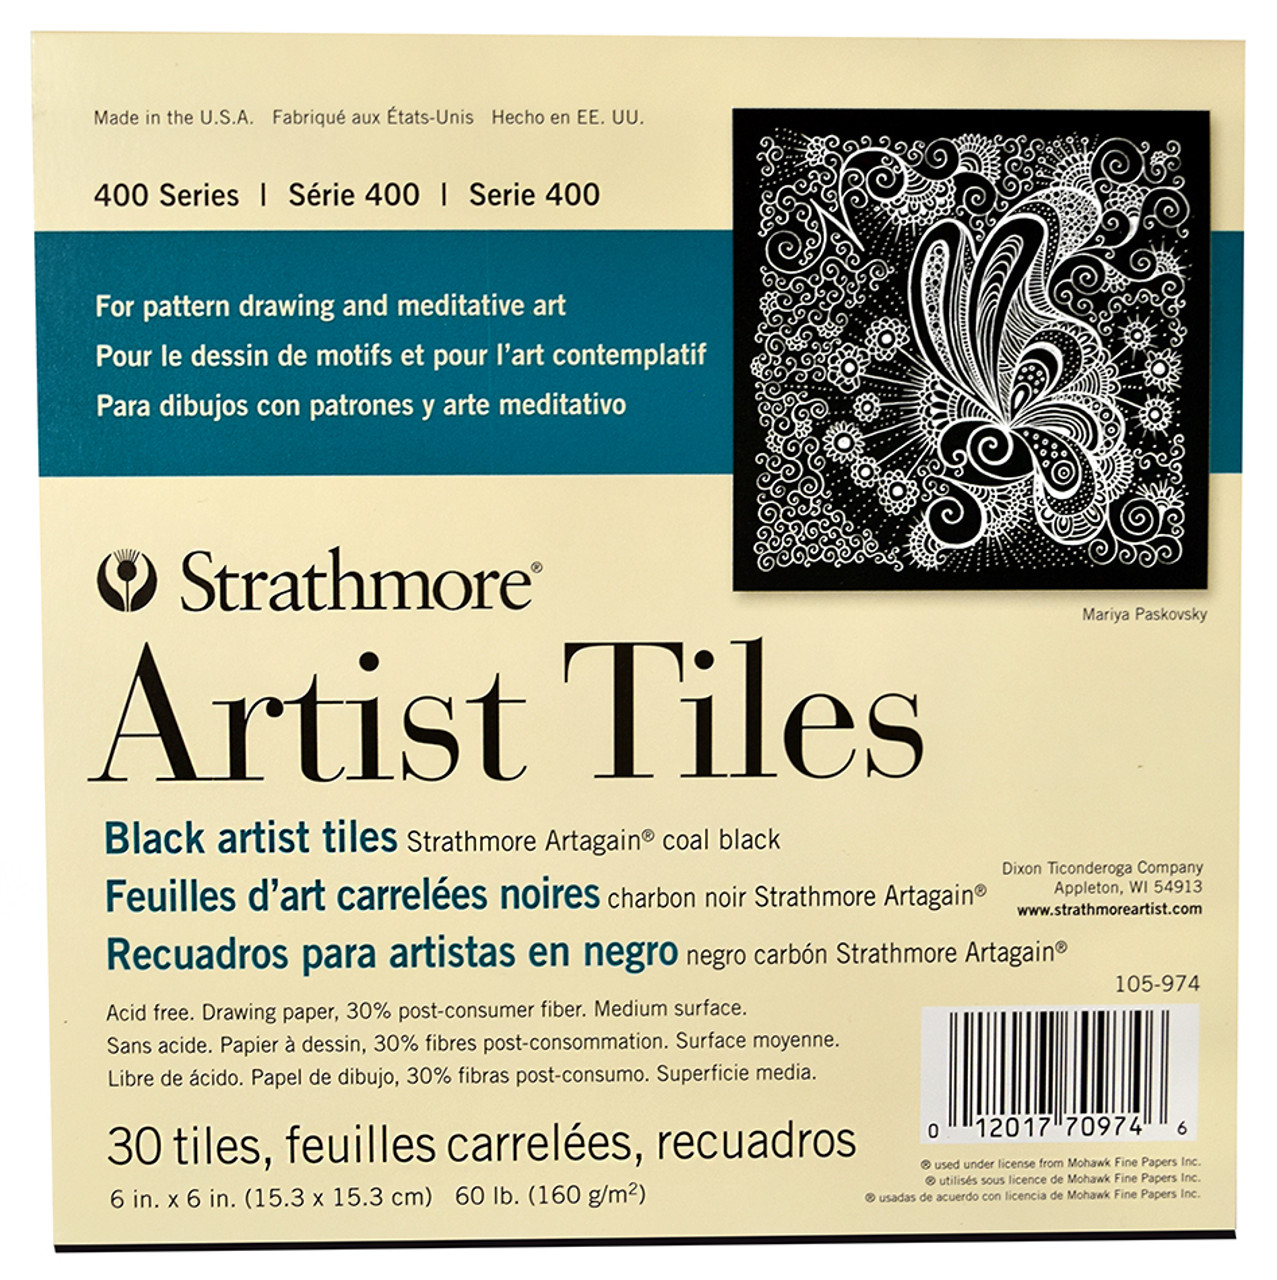 Strathmore 400 Series Watercolor Block - 15 x 20, 15 Sheets